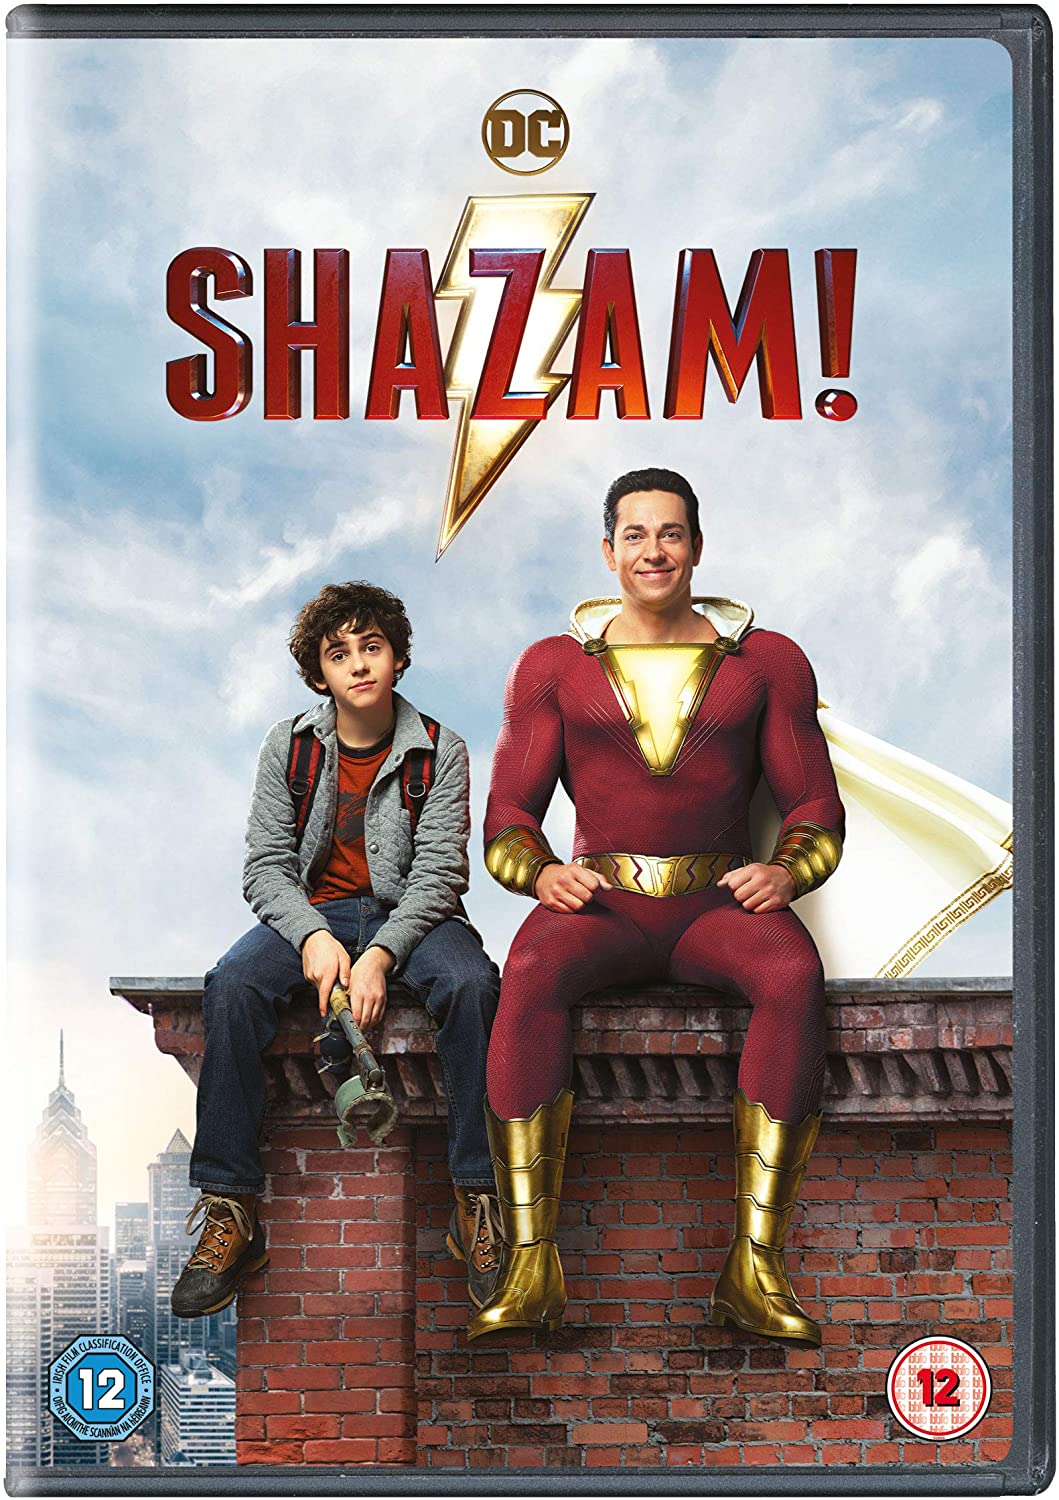 Shazam! [2019] - Action/Adventure [DVD]